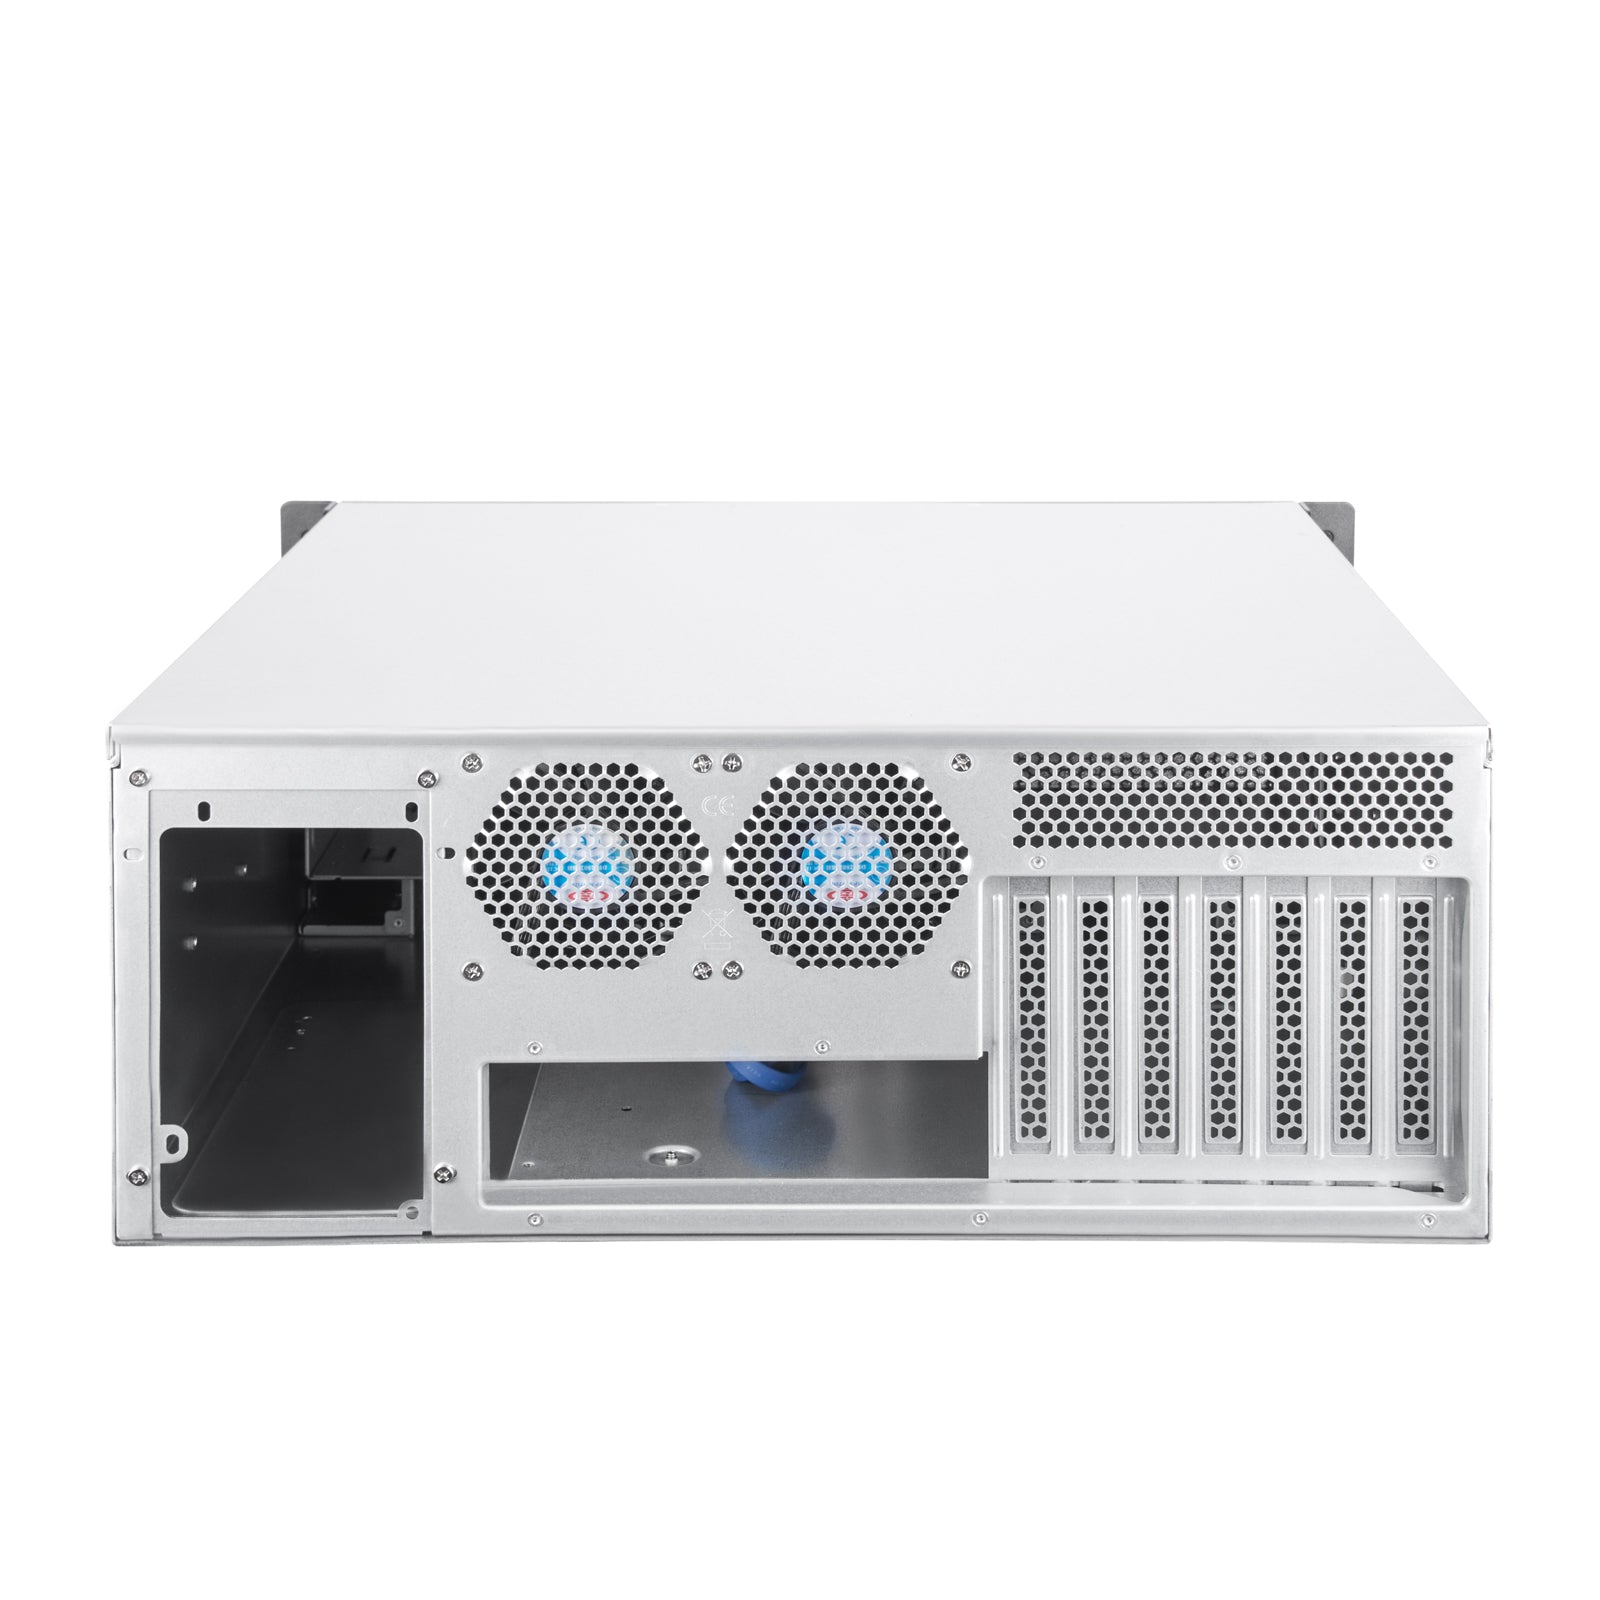 SilverStone RM41-506 4U 6-bay 5.25” rackmount server chassis